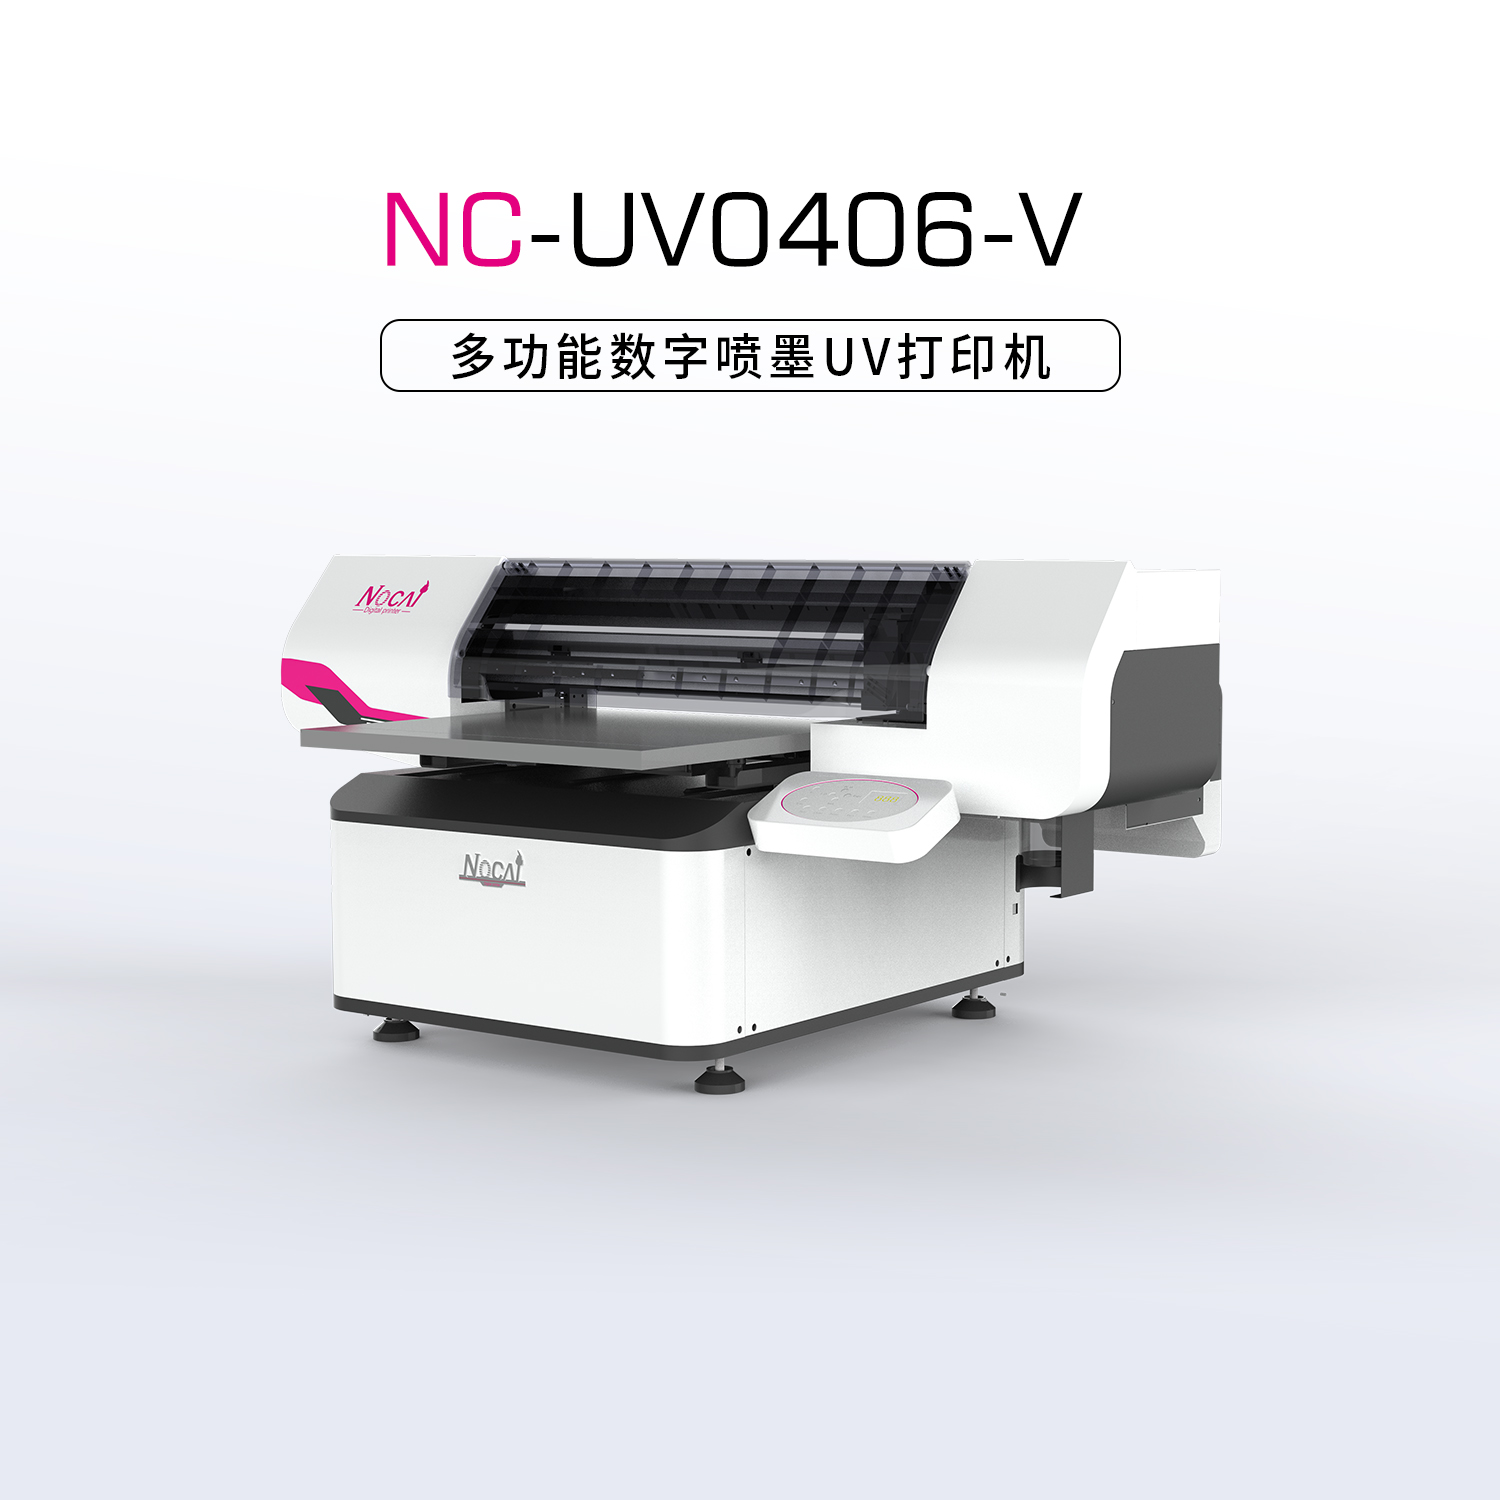 UV打印机工作中有异味的原因分析